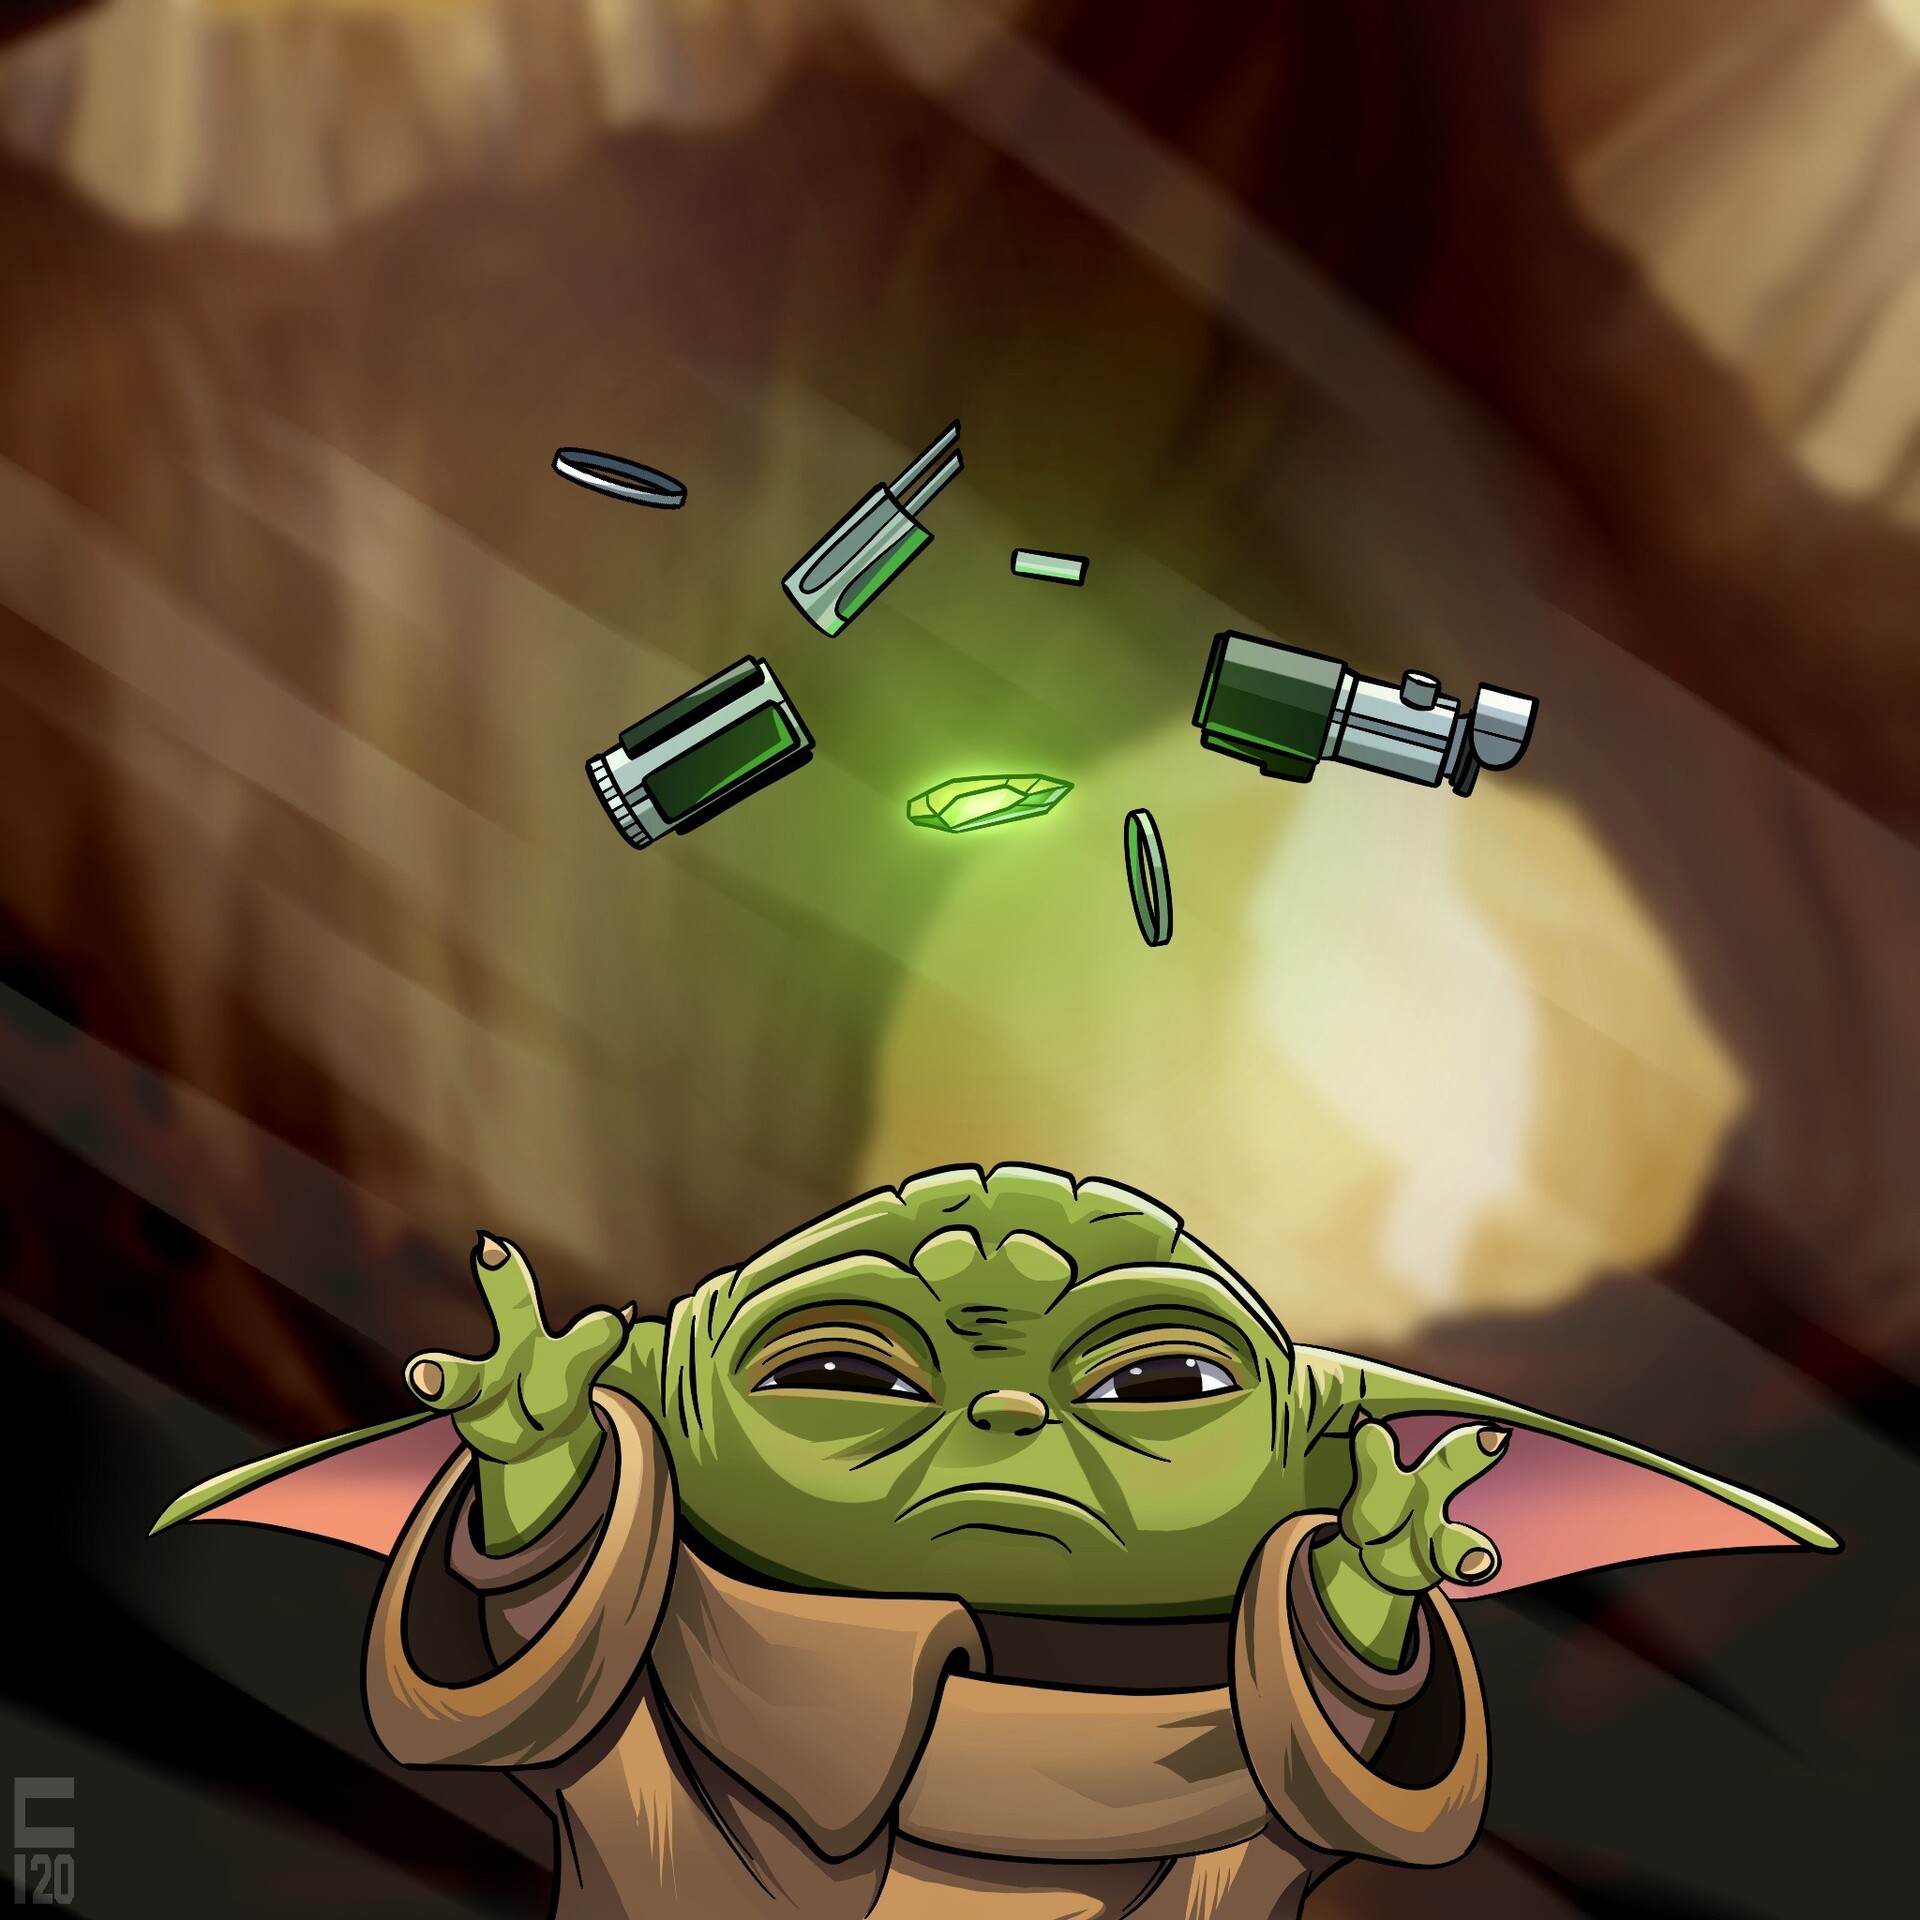 ArtStation - Baby Yoda Builds a Lightsaber